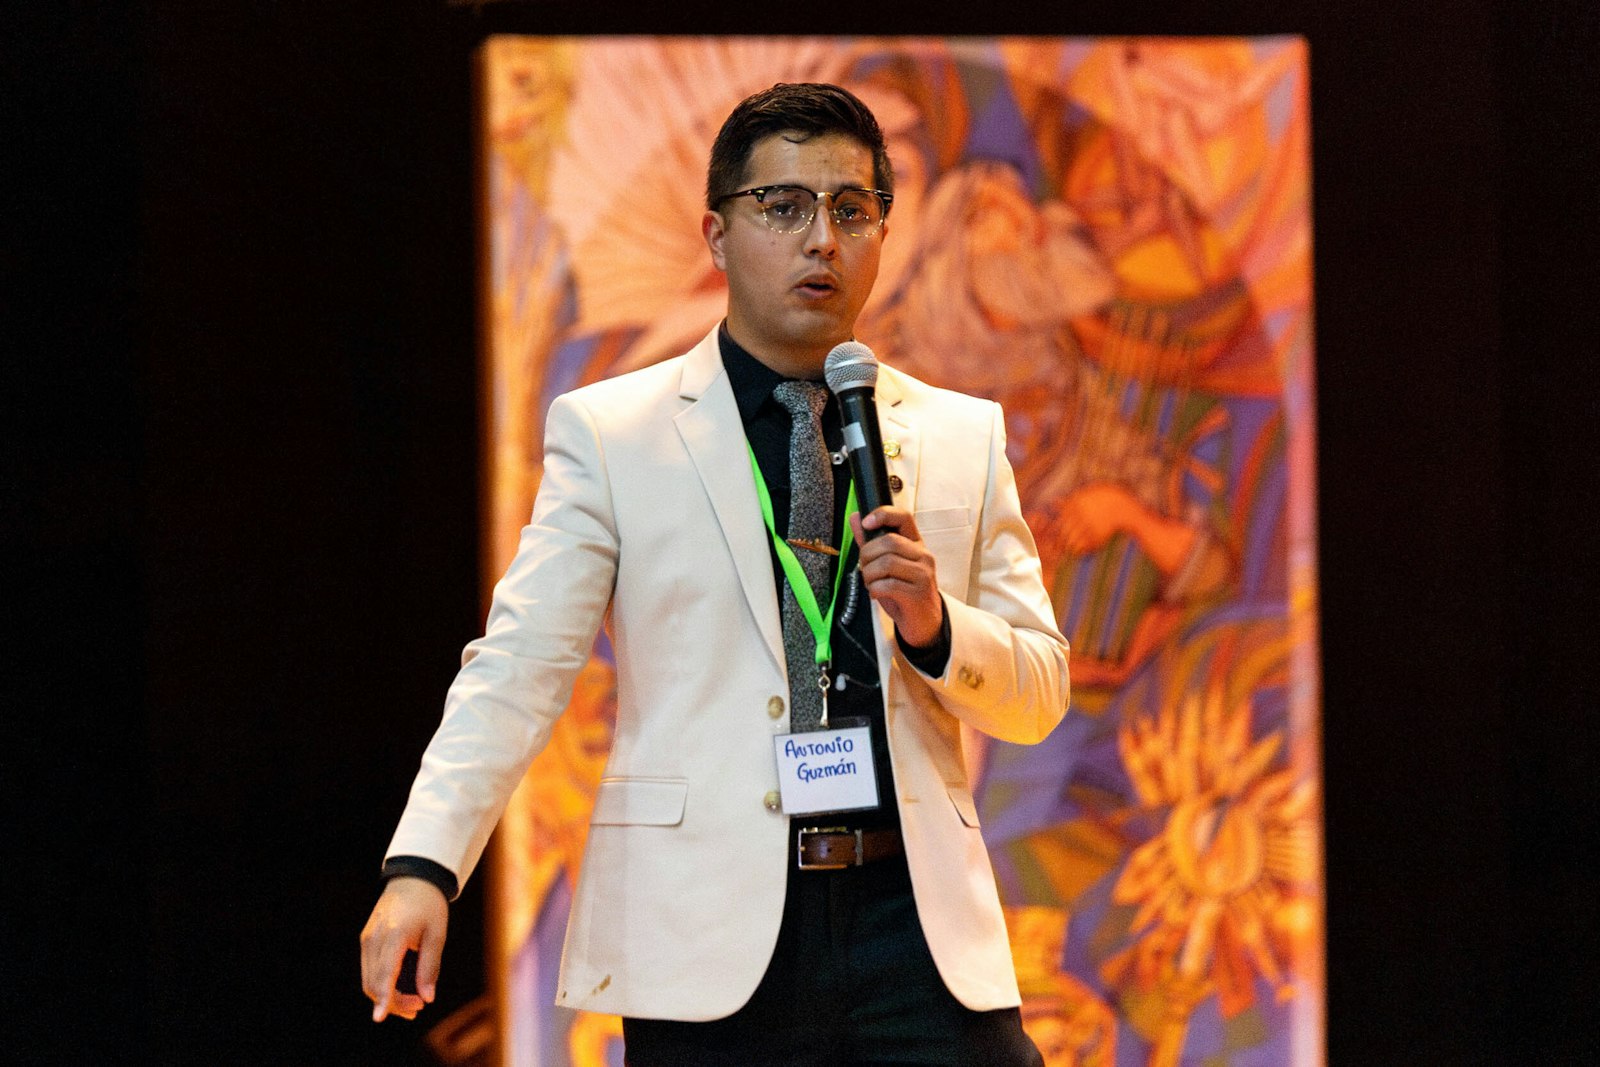 Antonio Guzman was the emcee for the 15th Detroit Hispanic Men's Conference.